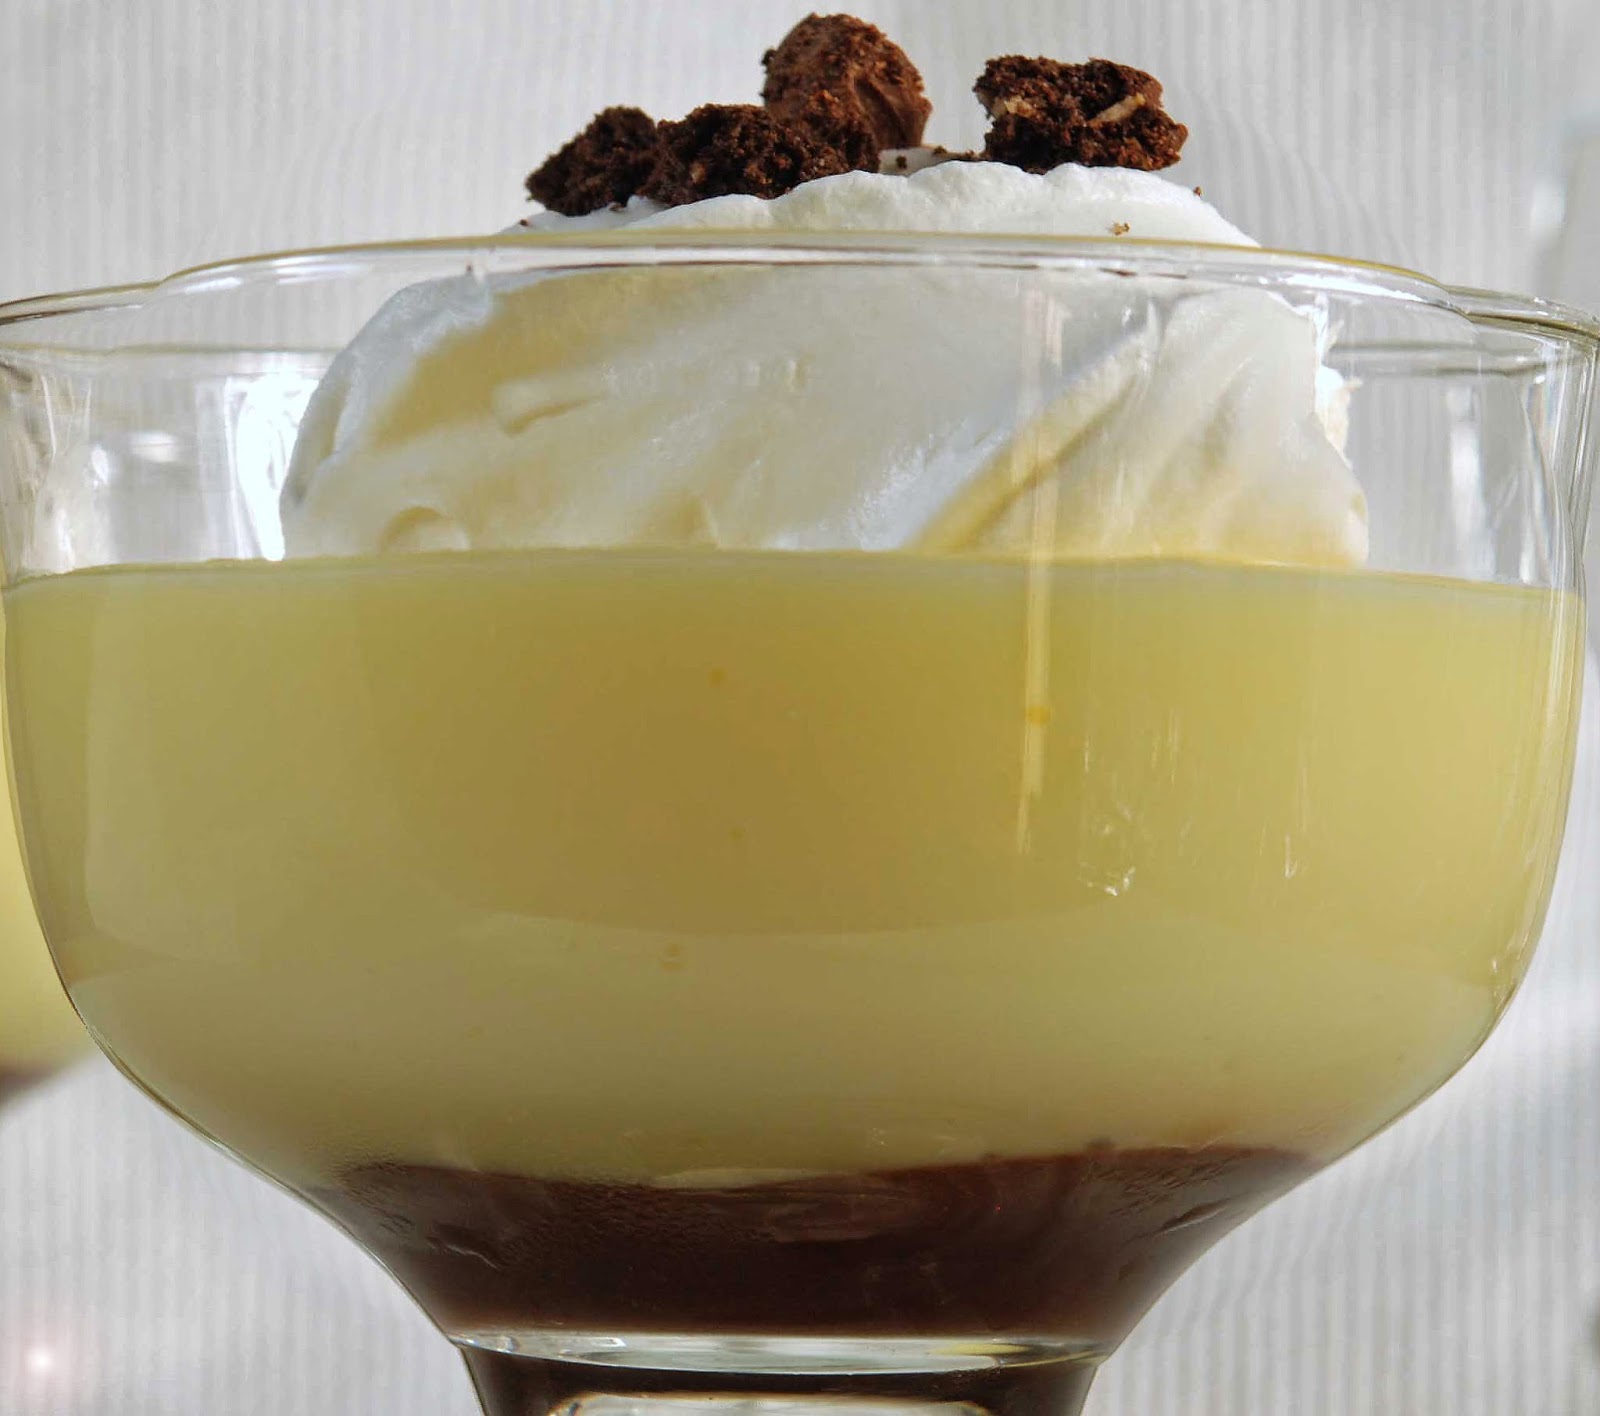 xìngren-jelly-chinese-almond-pudding-molecular-gastronomy-recipe